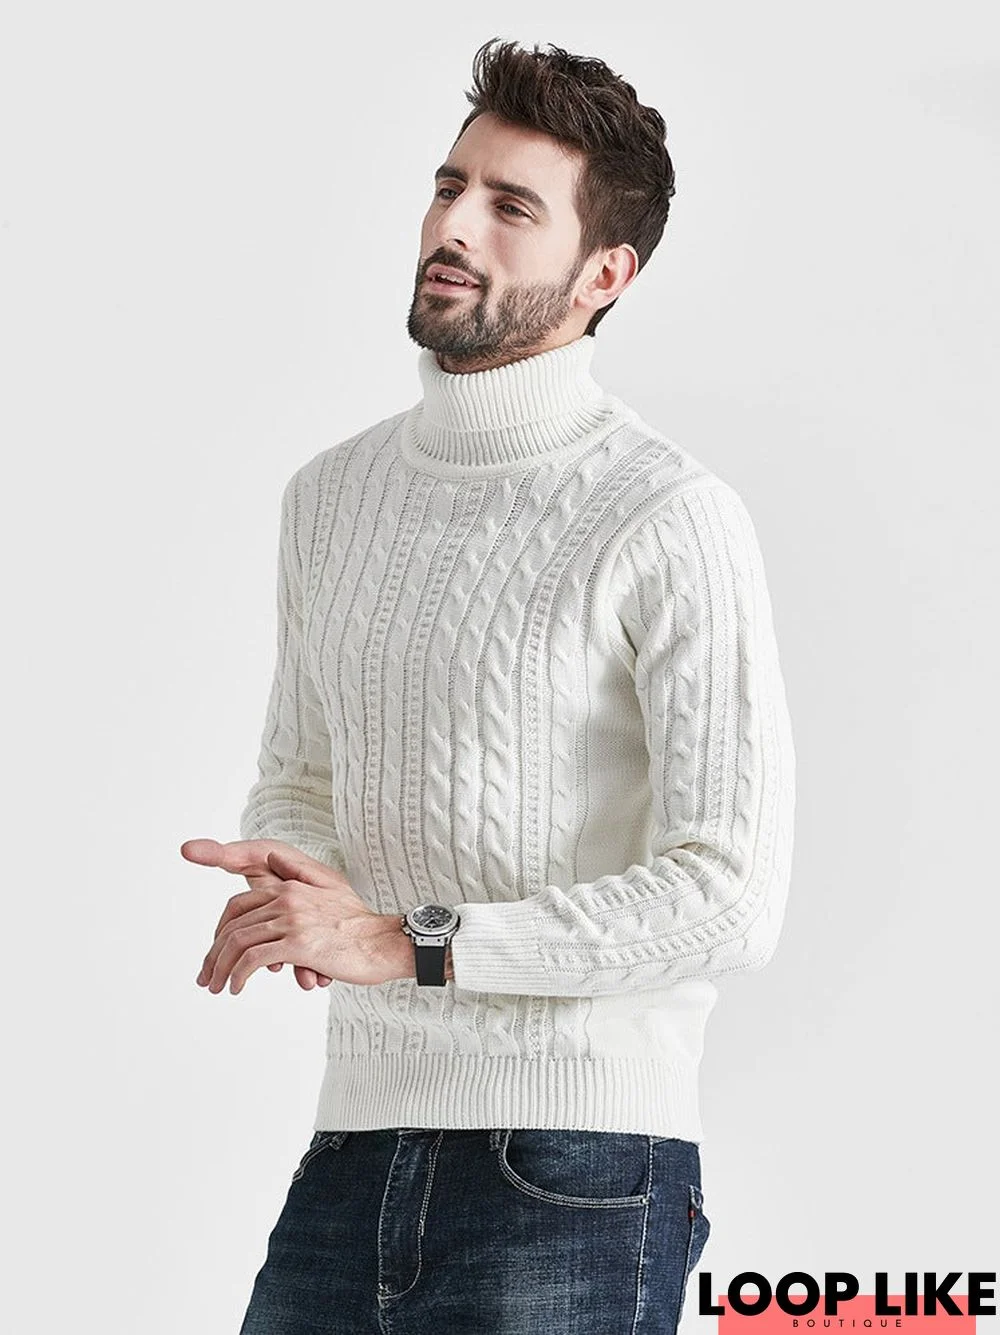 High Neck Versatile Men's Sweater